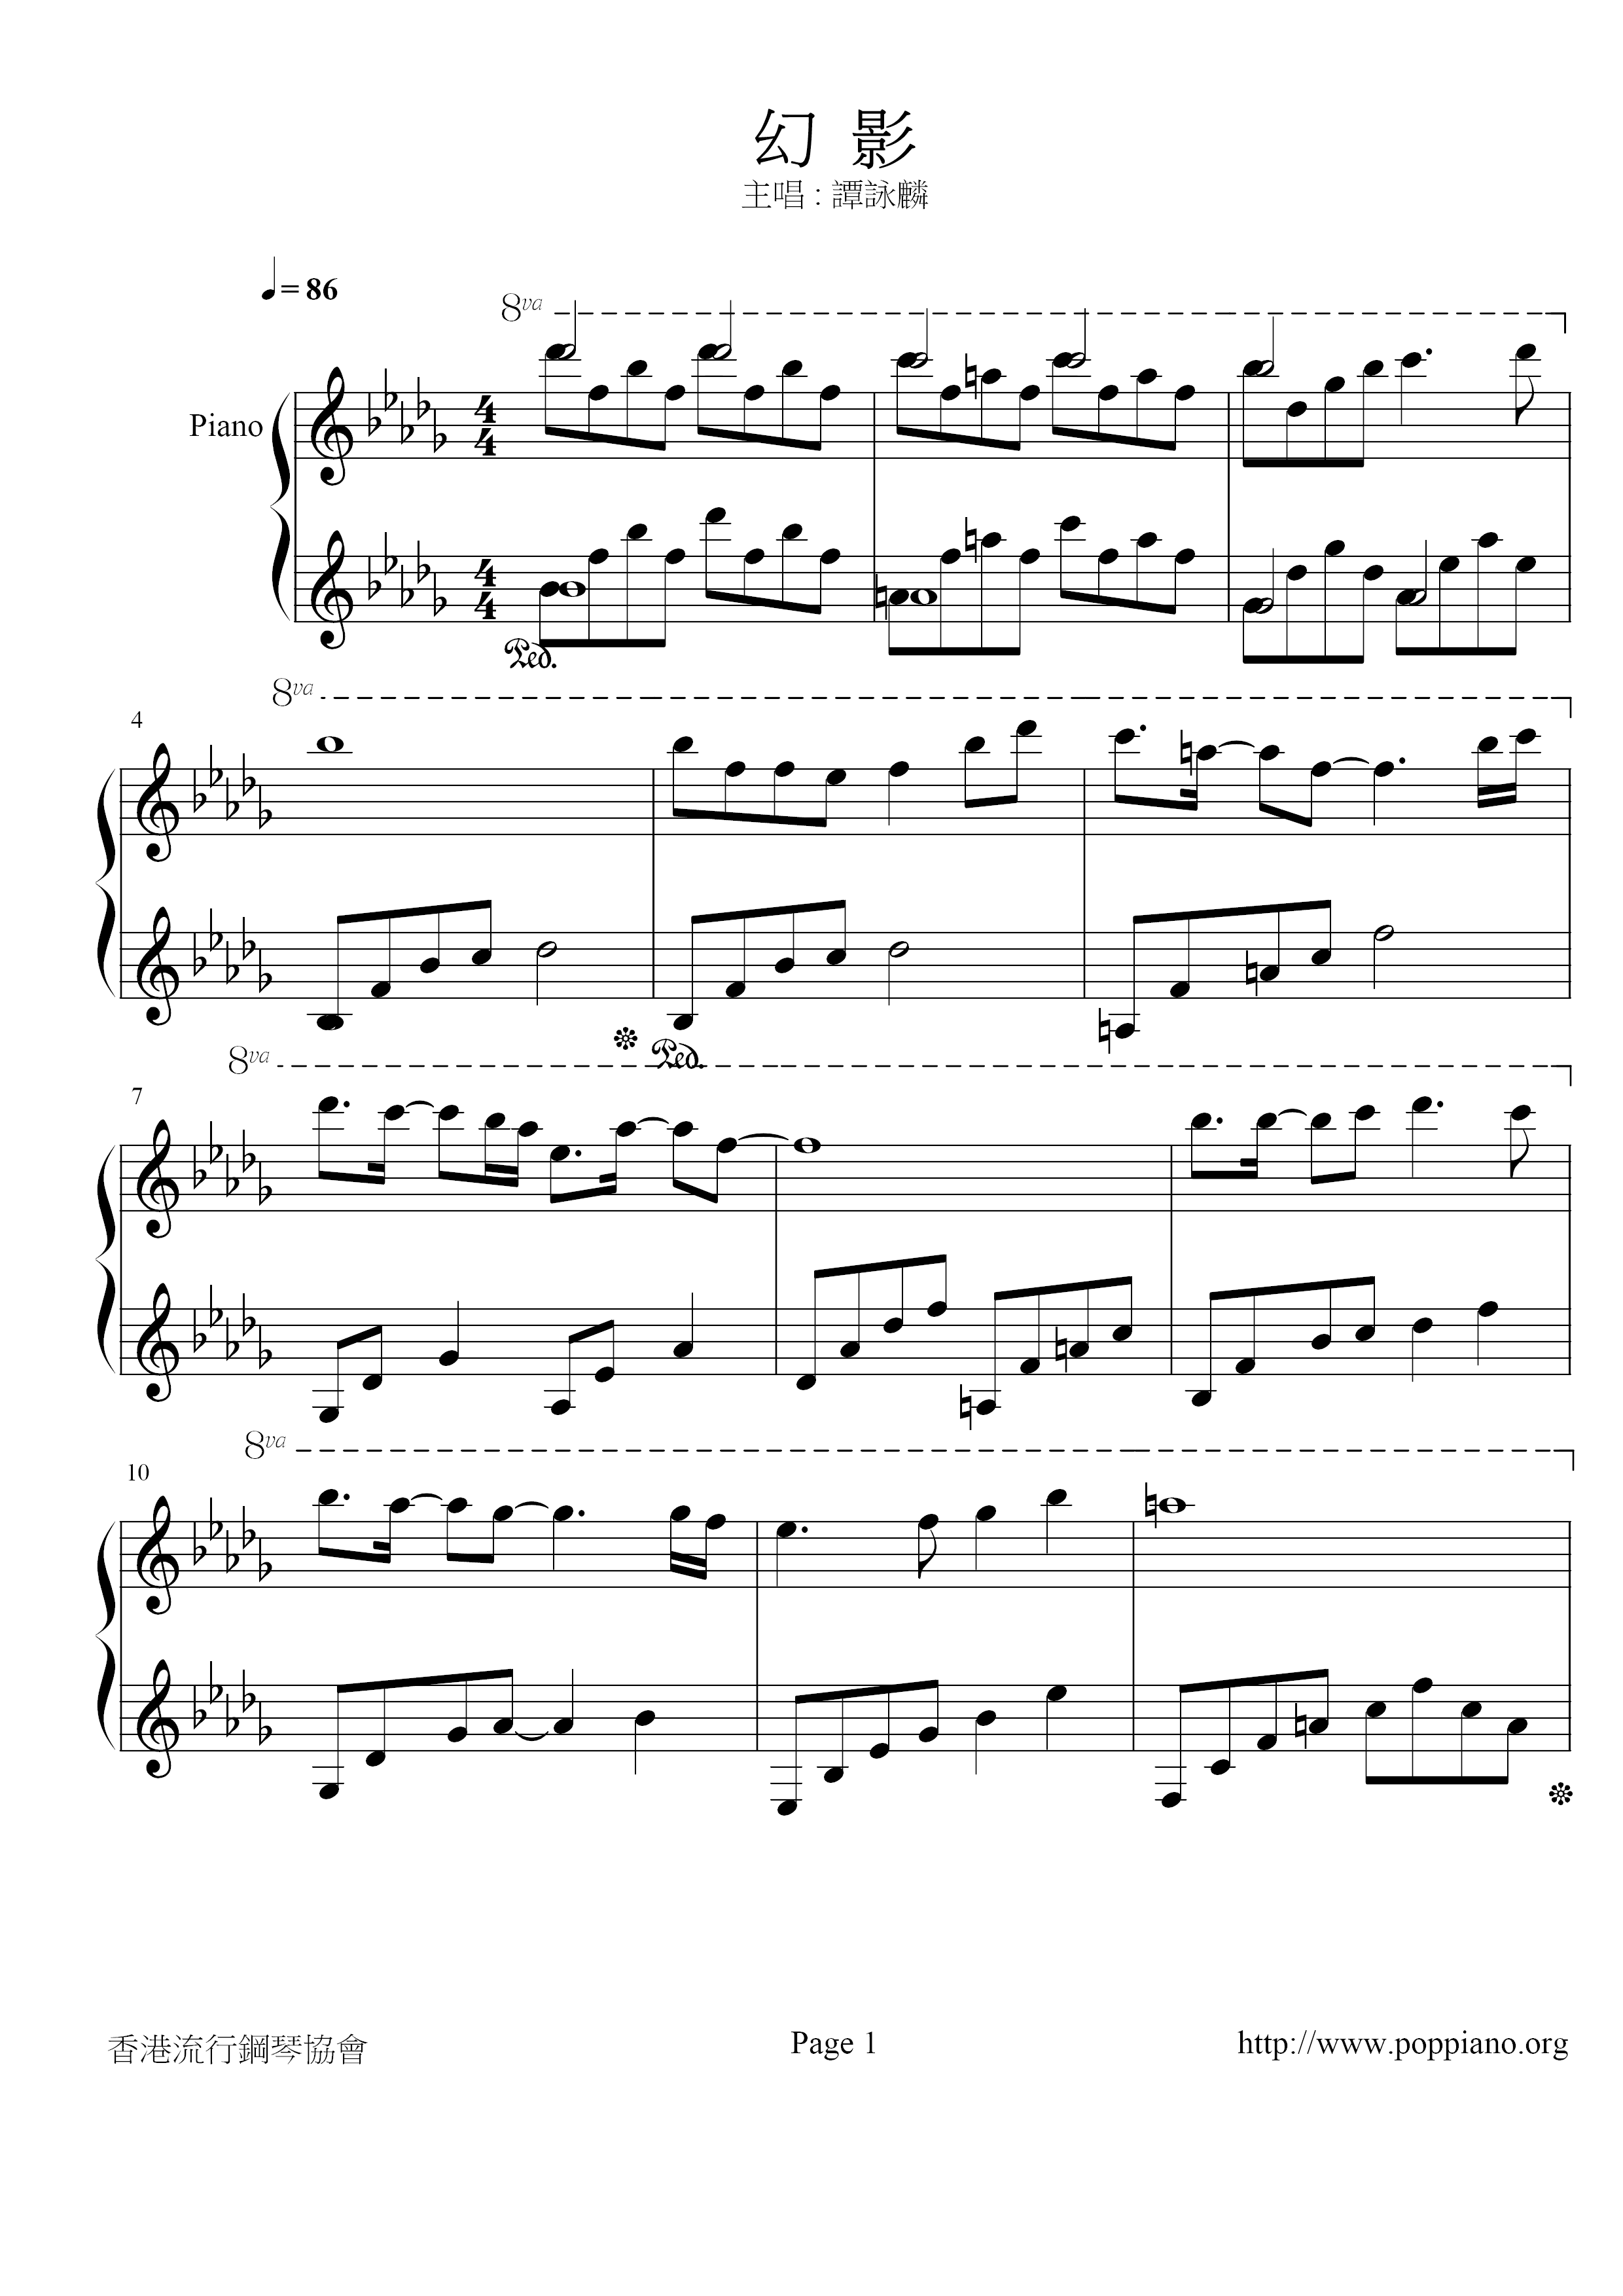 Phantom Score